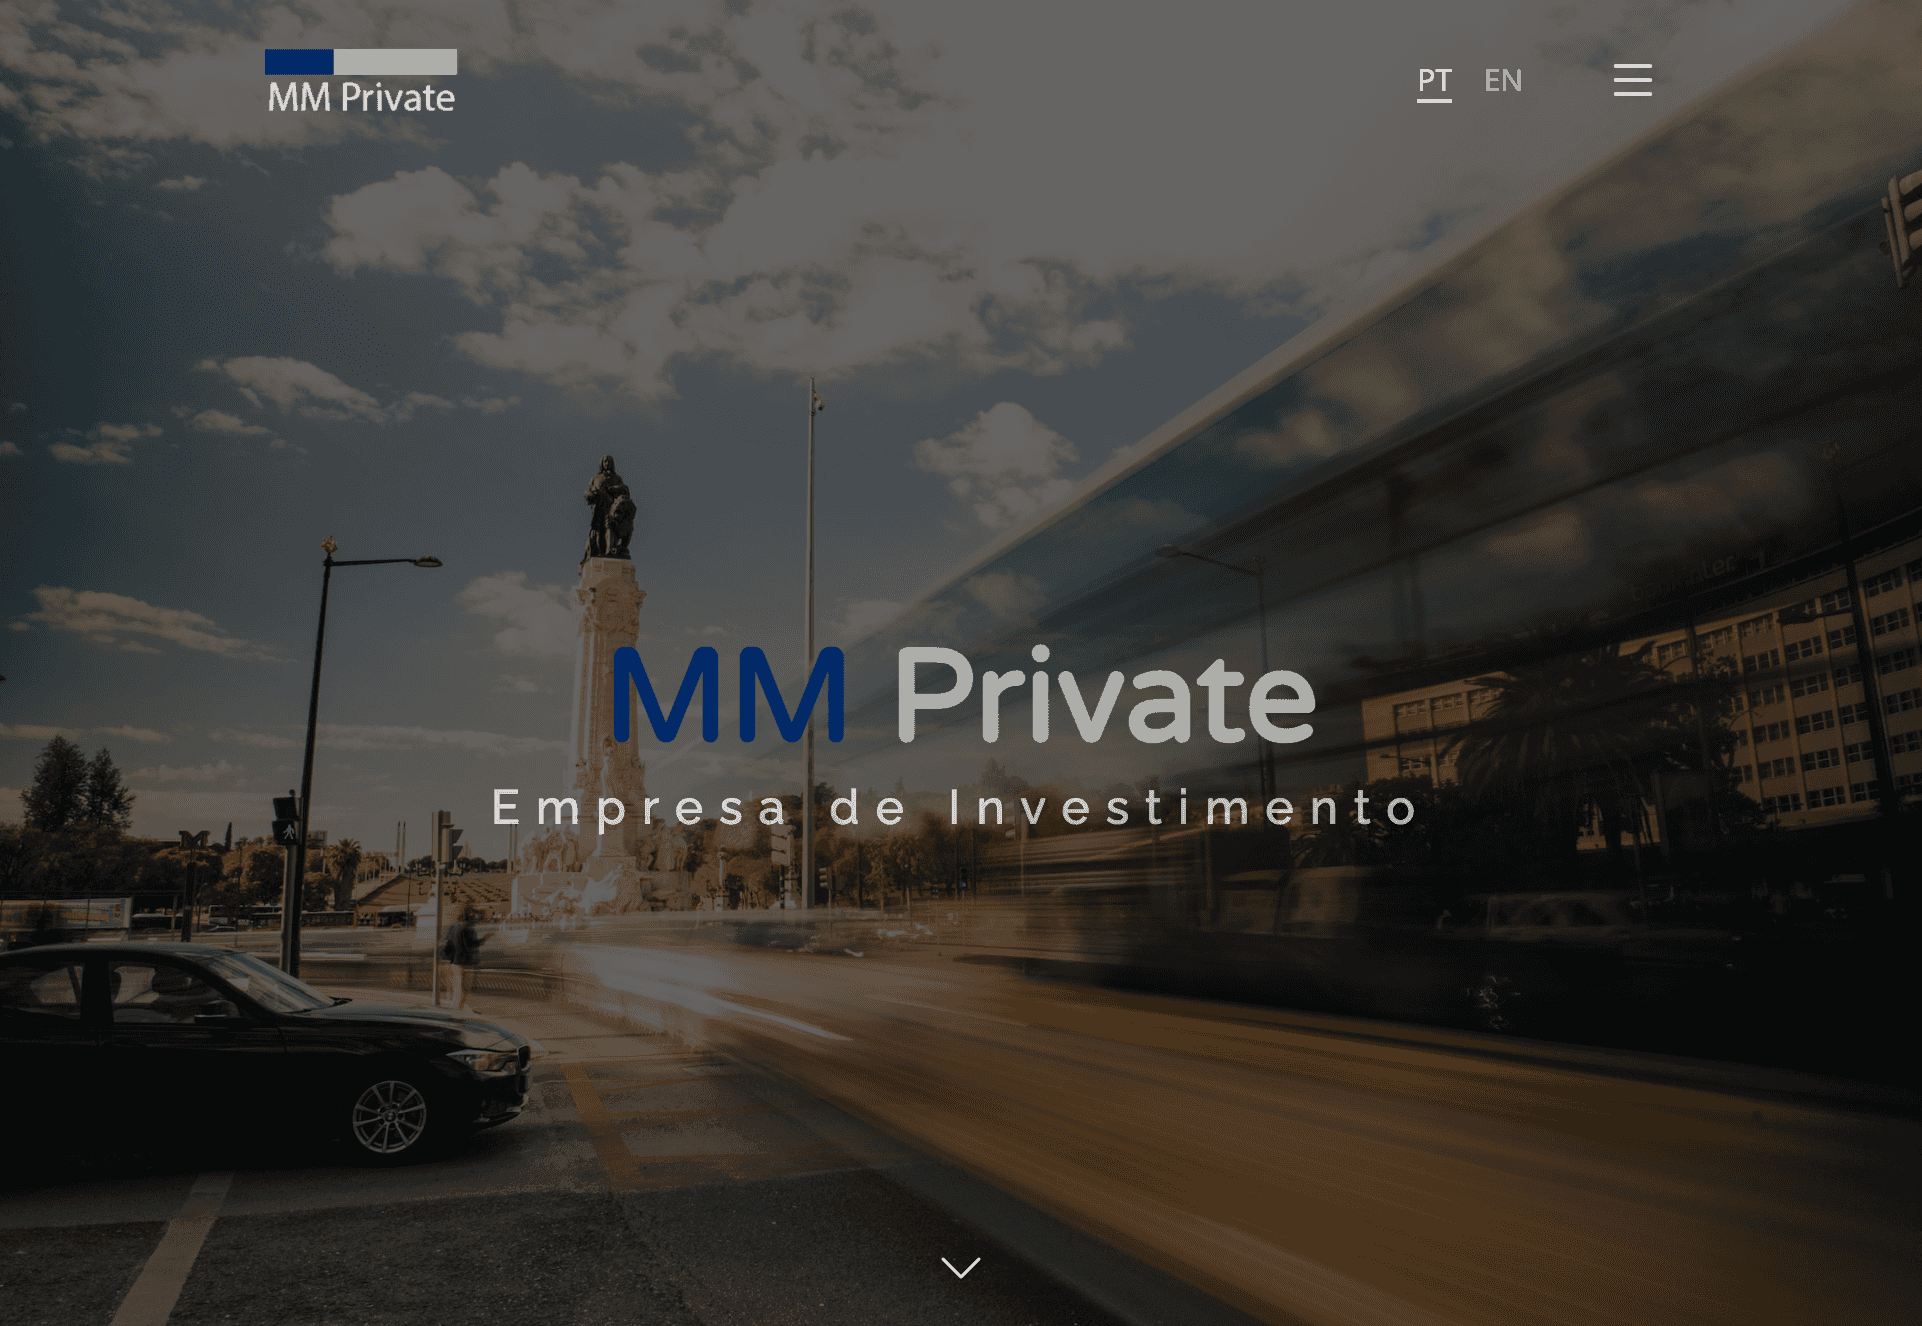 MM Private website